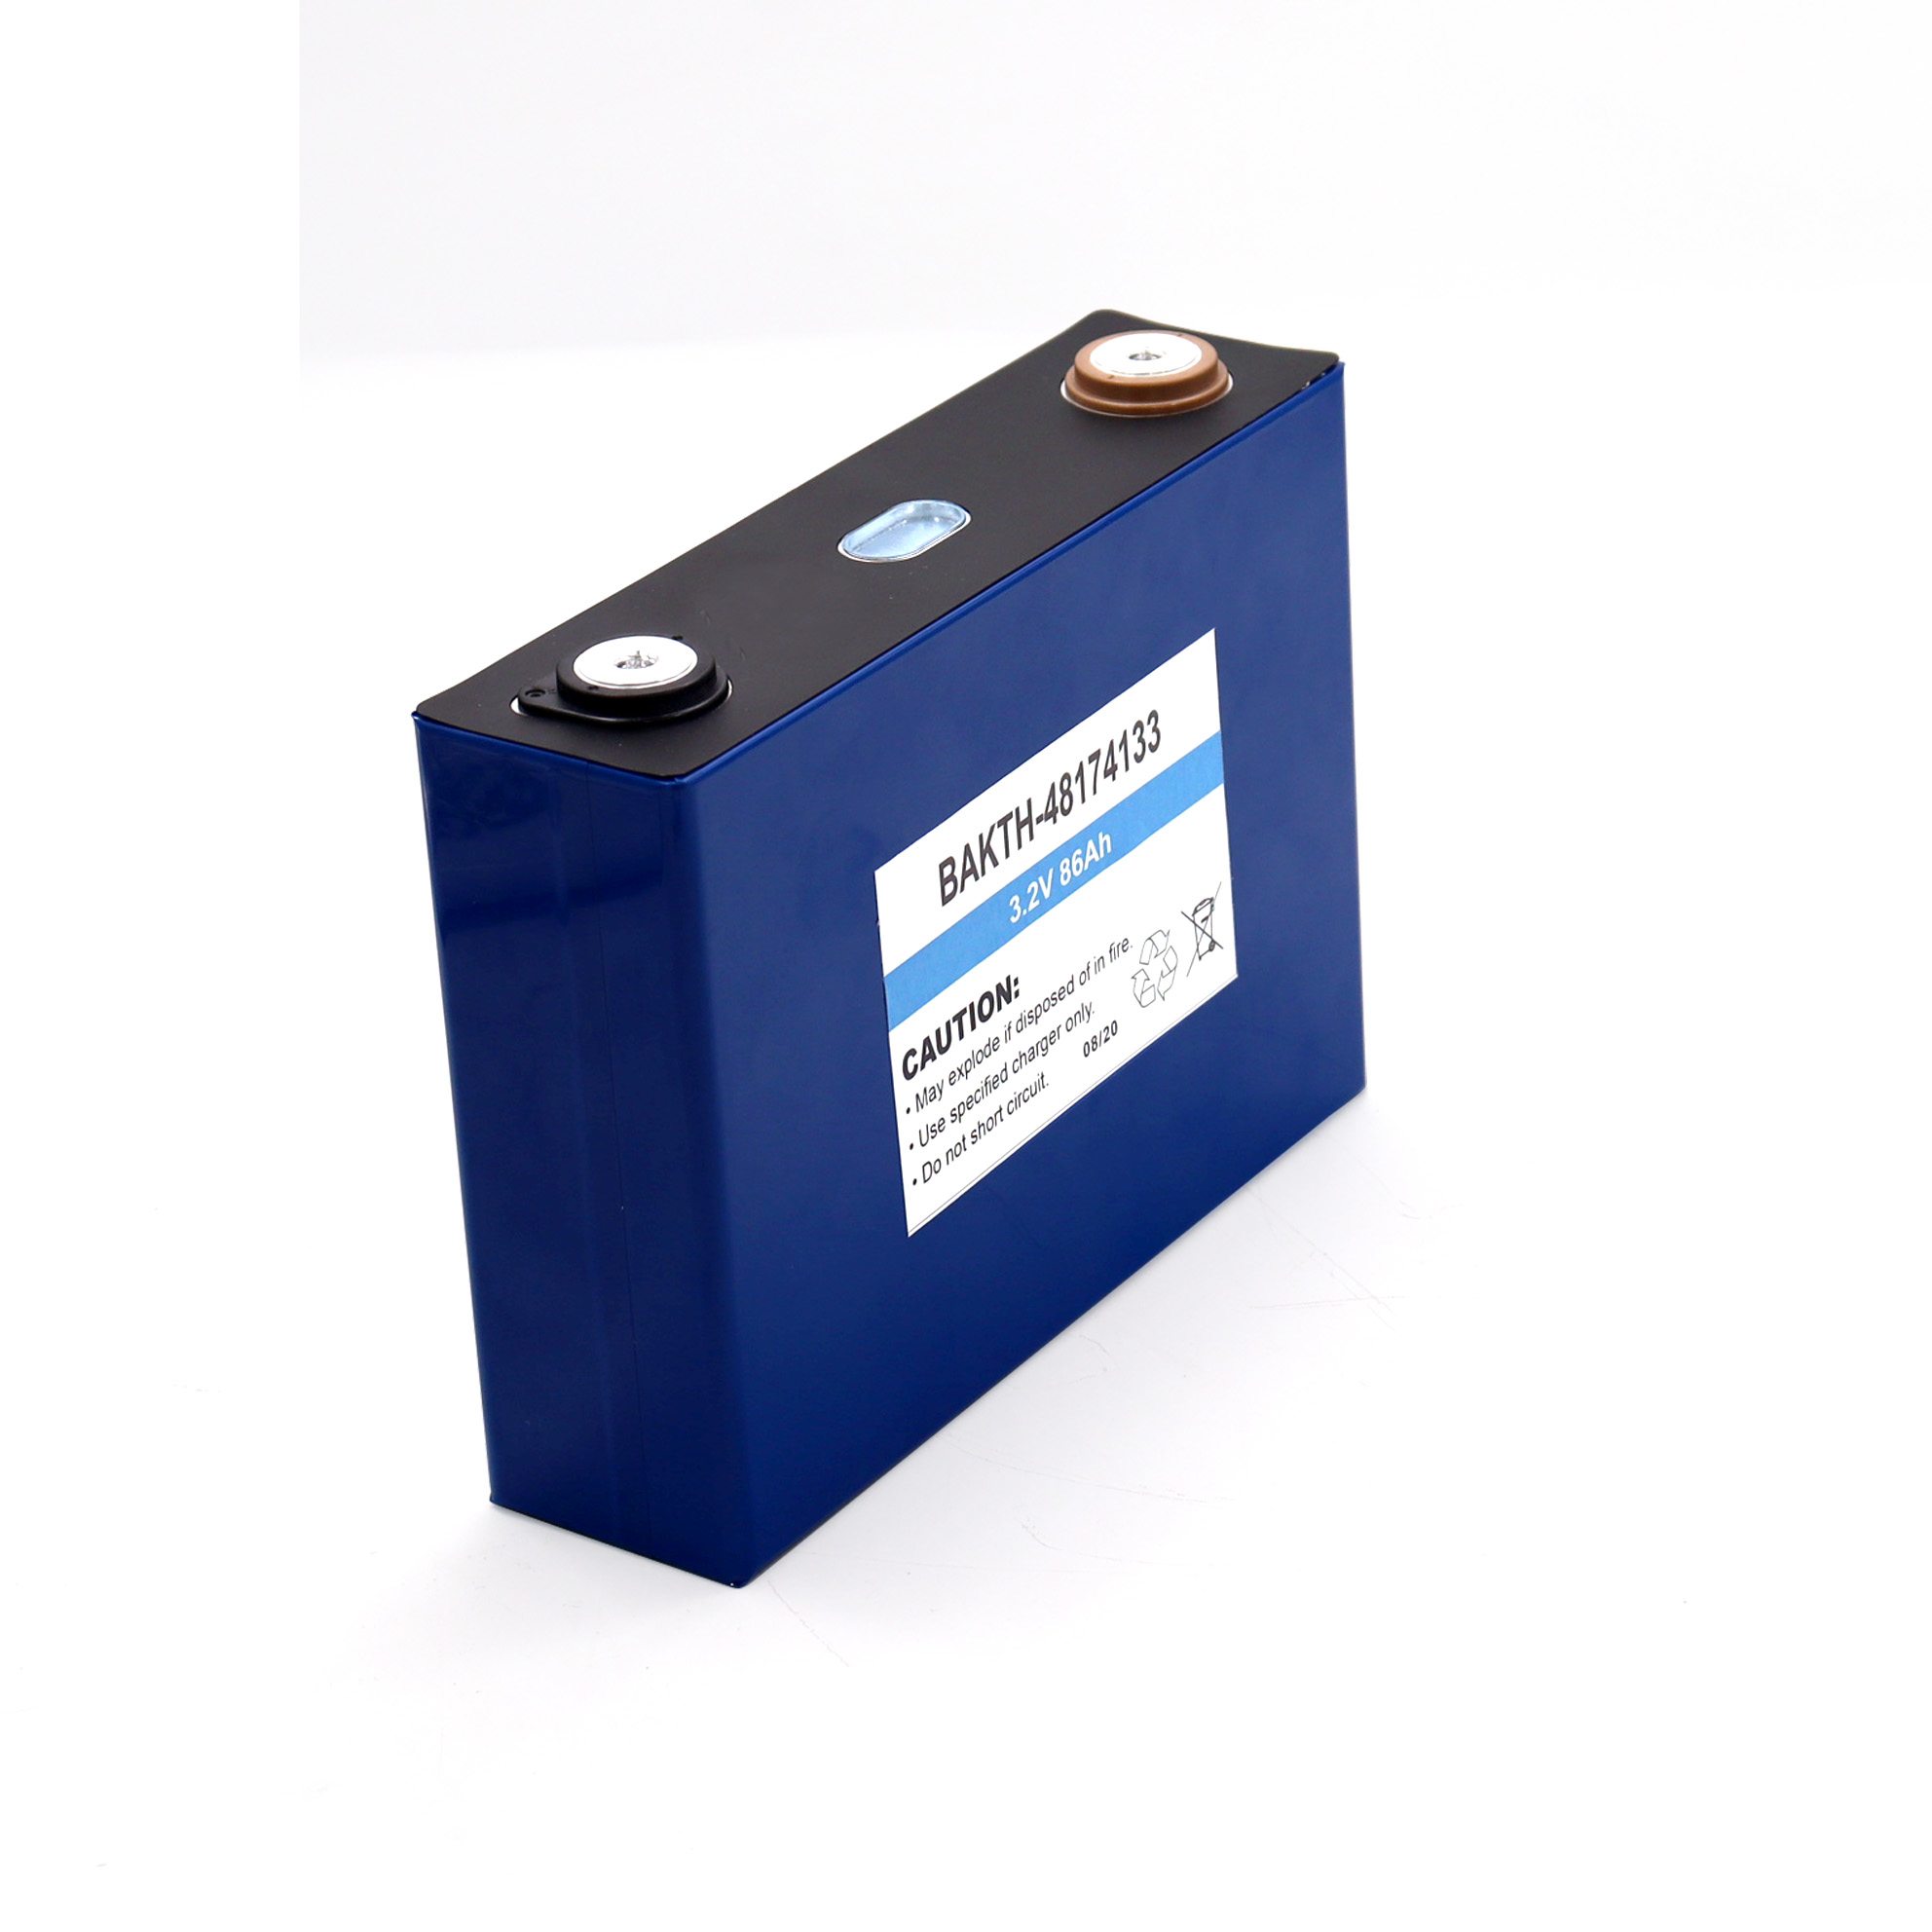 7,5 Ah LiFePO4 Batteriezelle mit hoher Kapazität für Elektrofahrrad